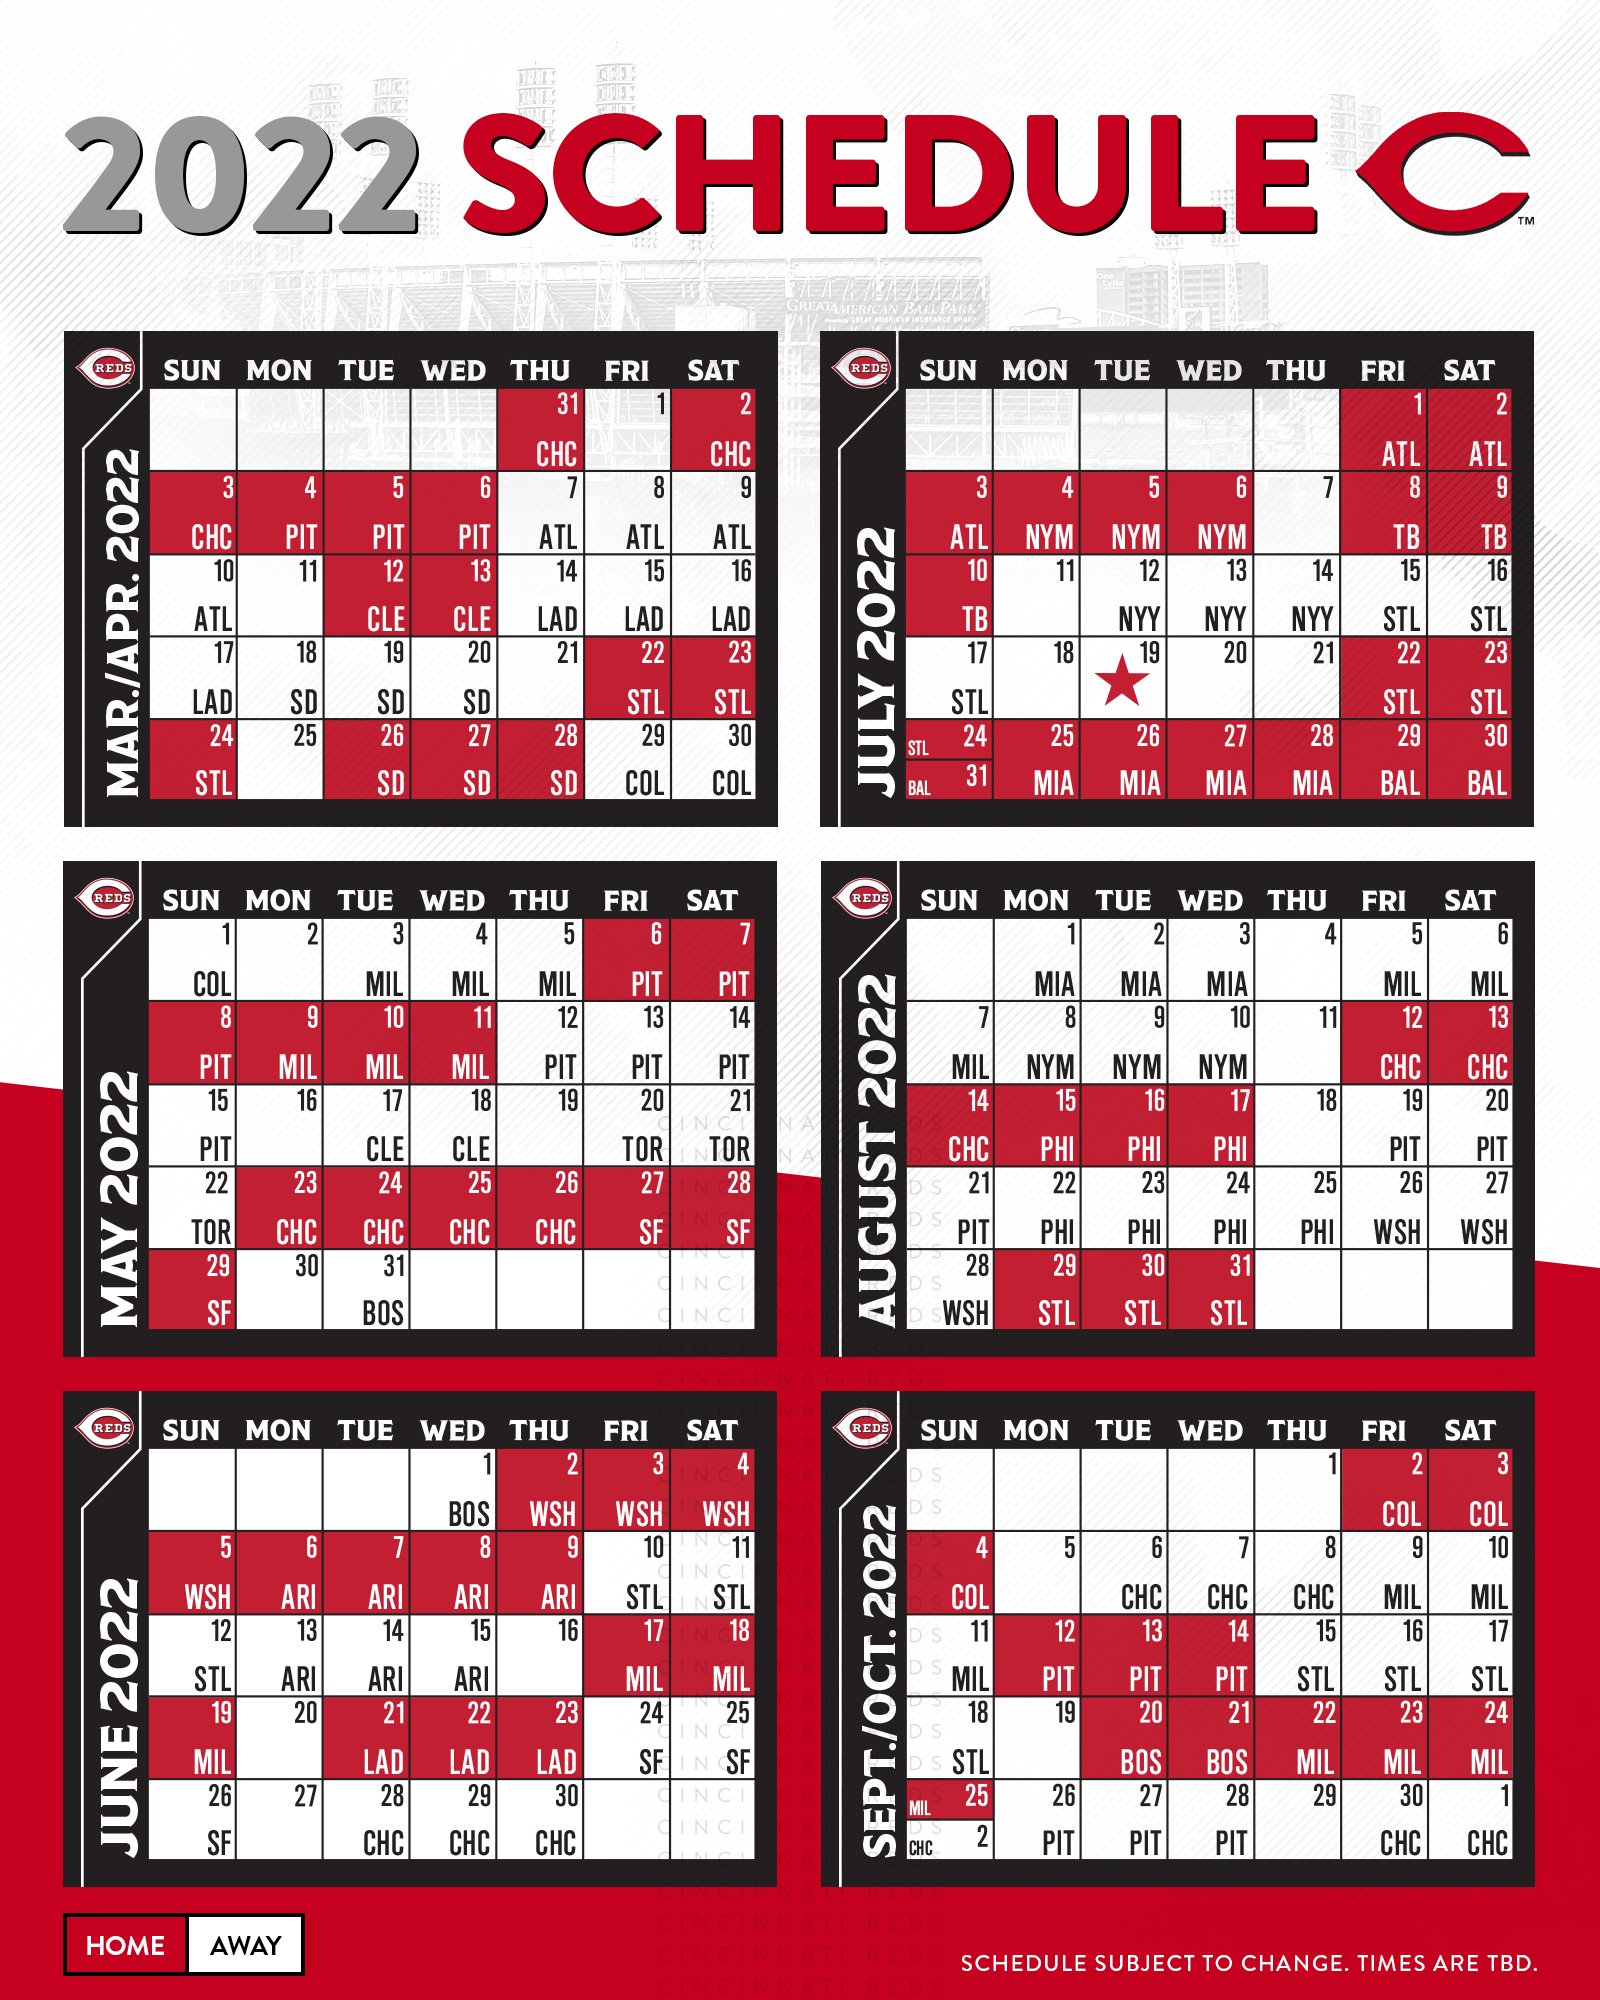 Reds 2021 schedule released - Cincinnati Business Courier